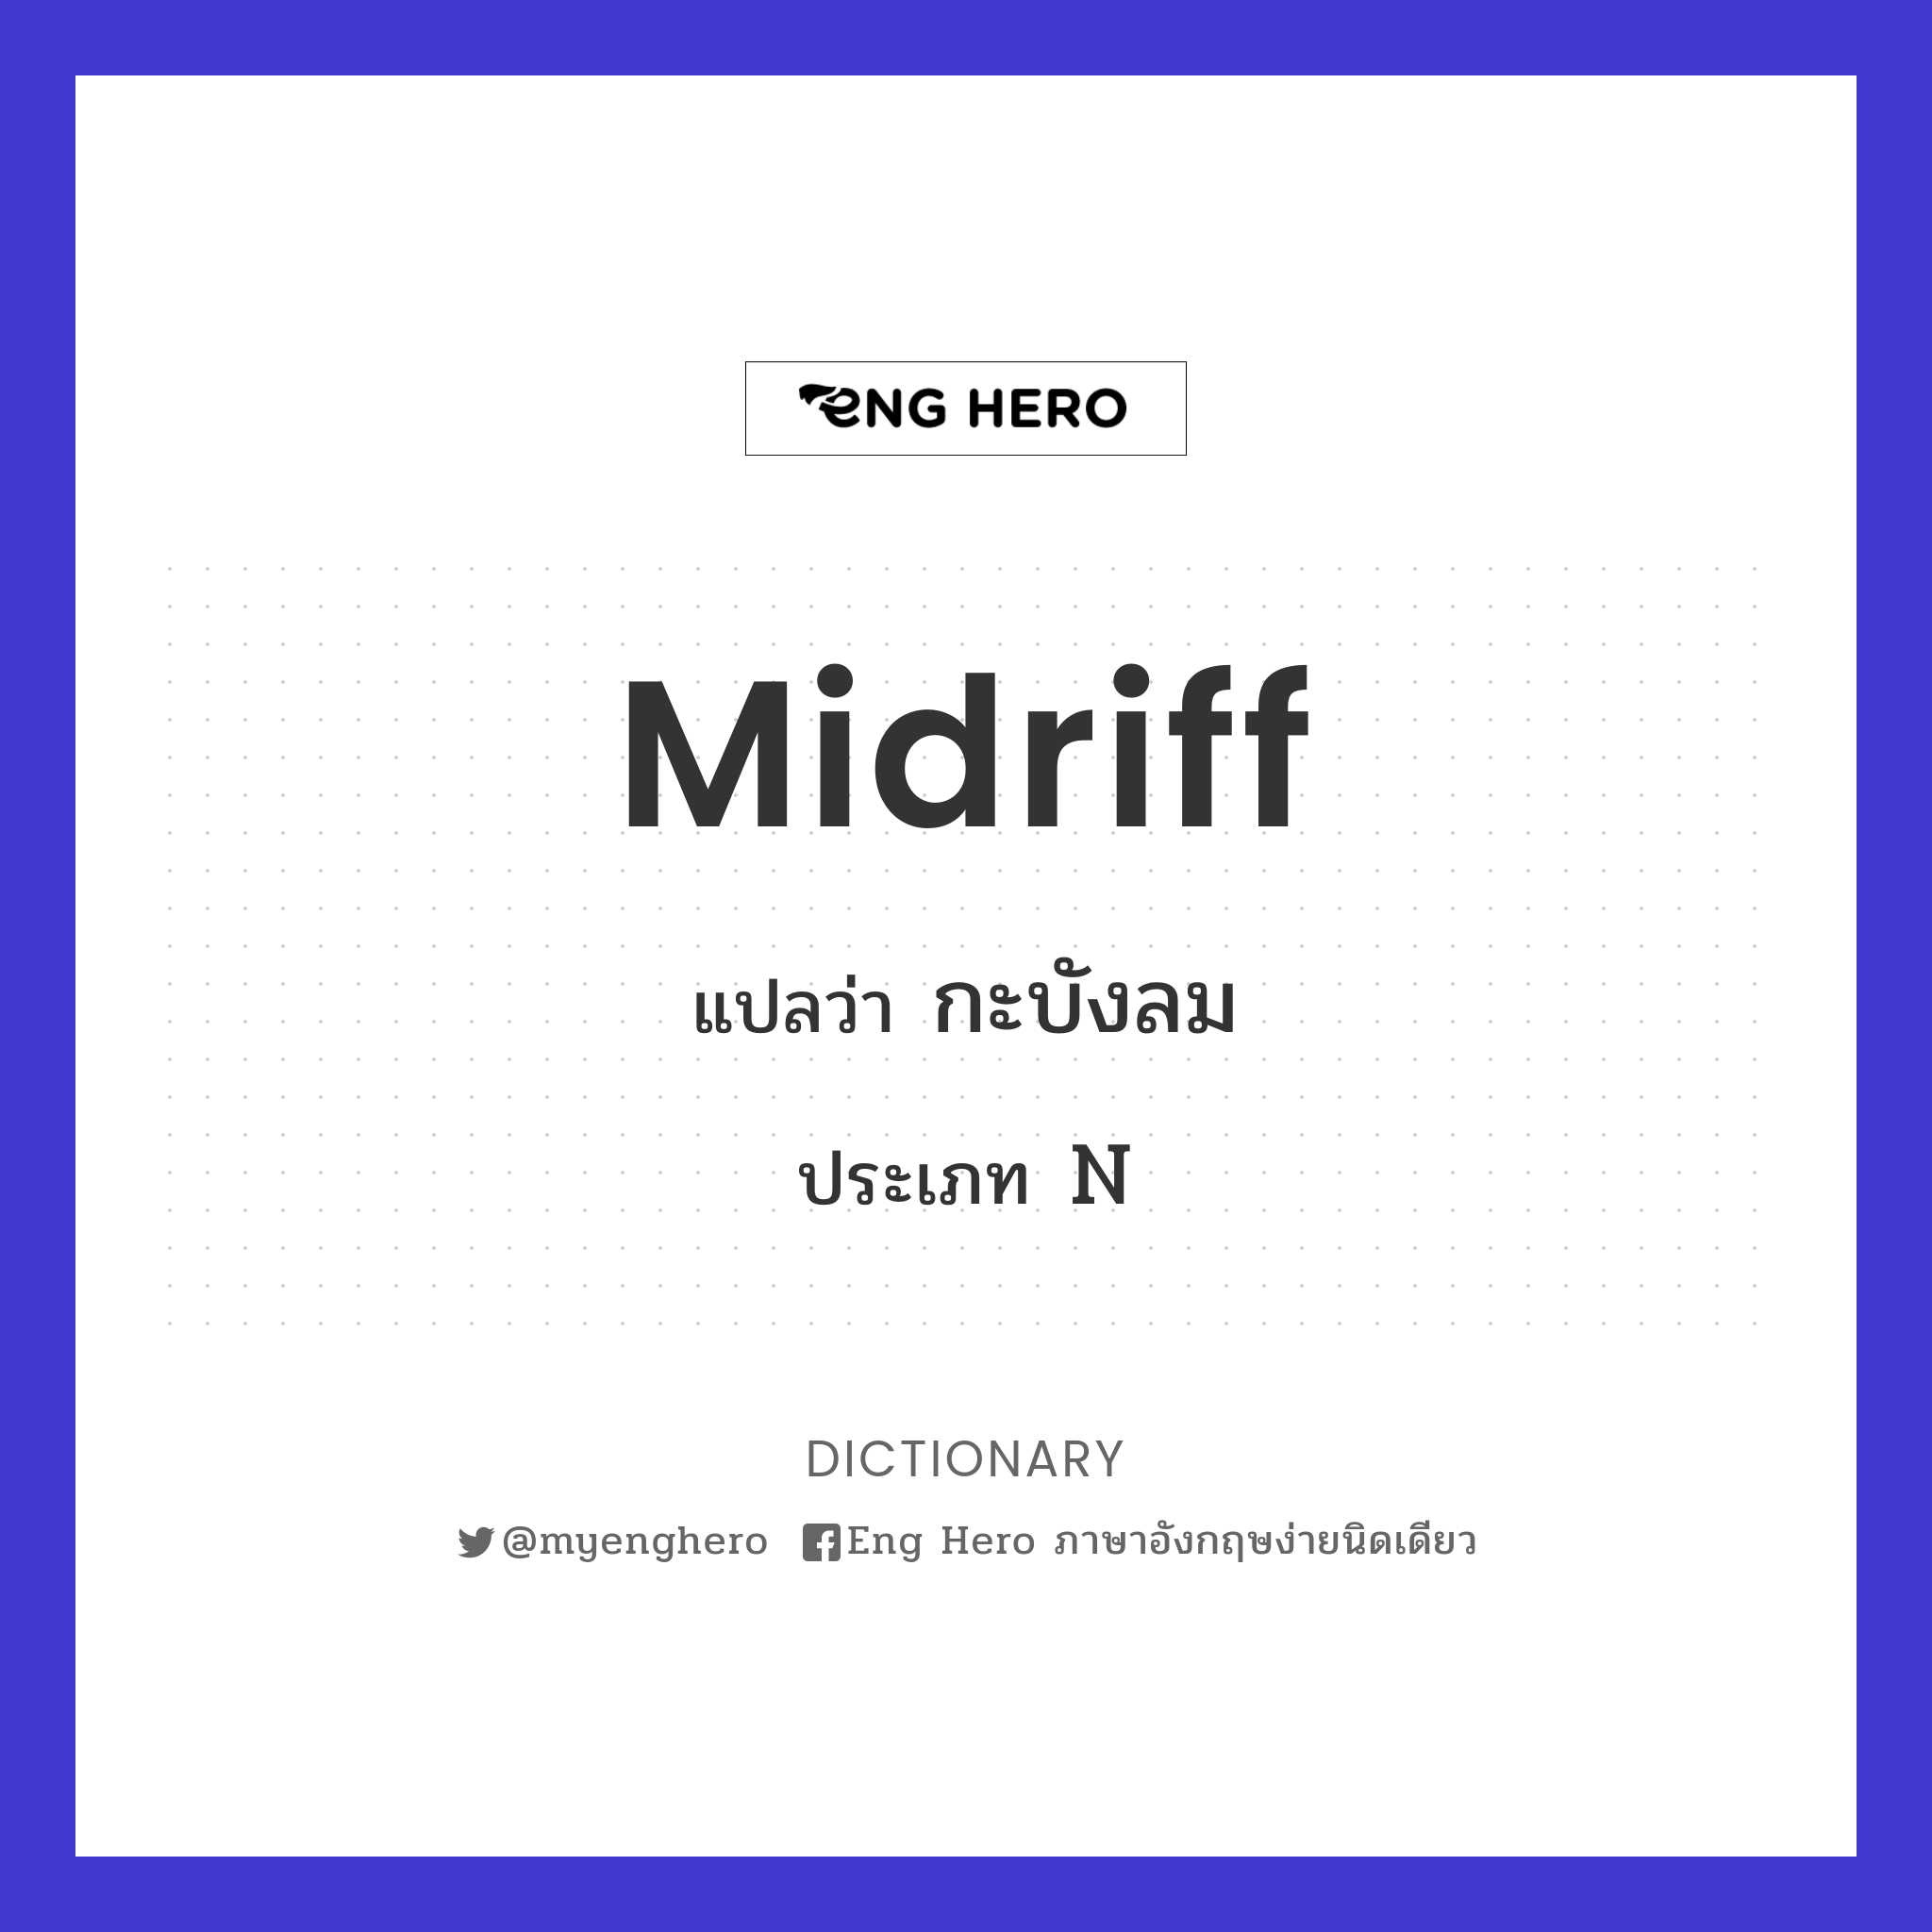 midriff